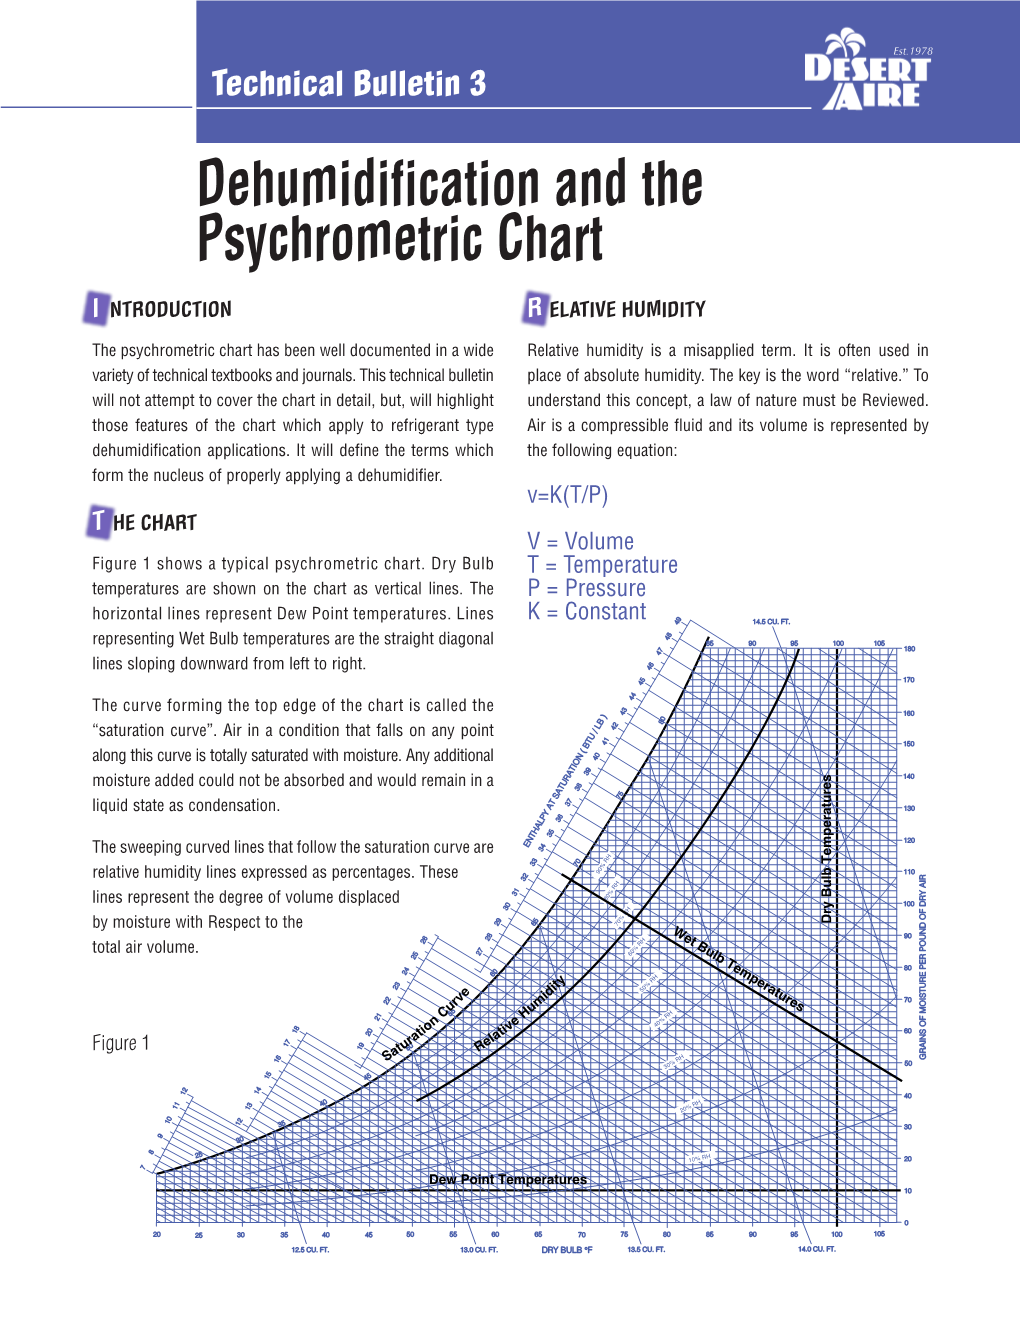 Dehumidification and the Psychrometric Chart